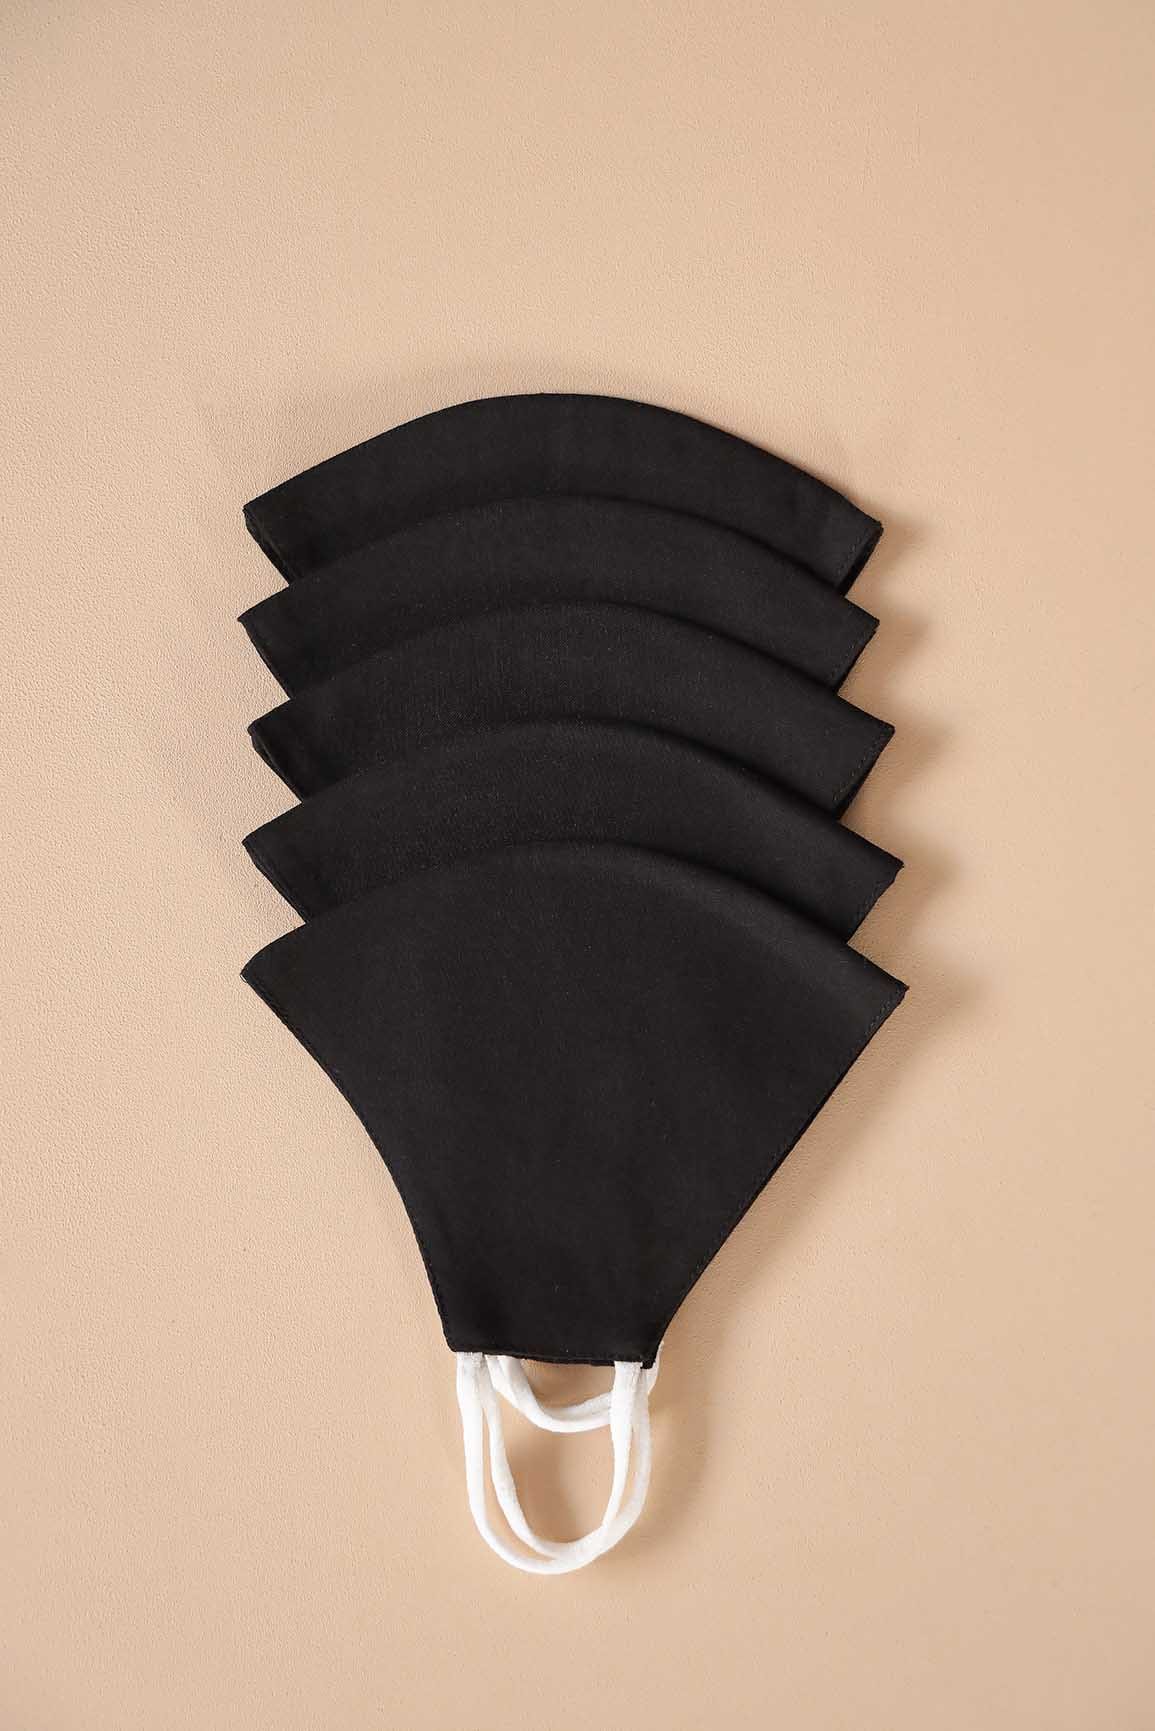 doeraa Masks Black Masks / 10 pieces Super Comfortable 3 Layer Cotton Masks